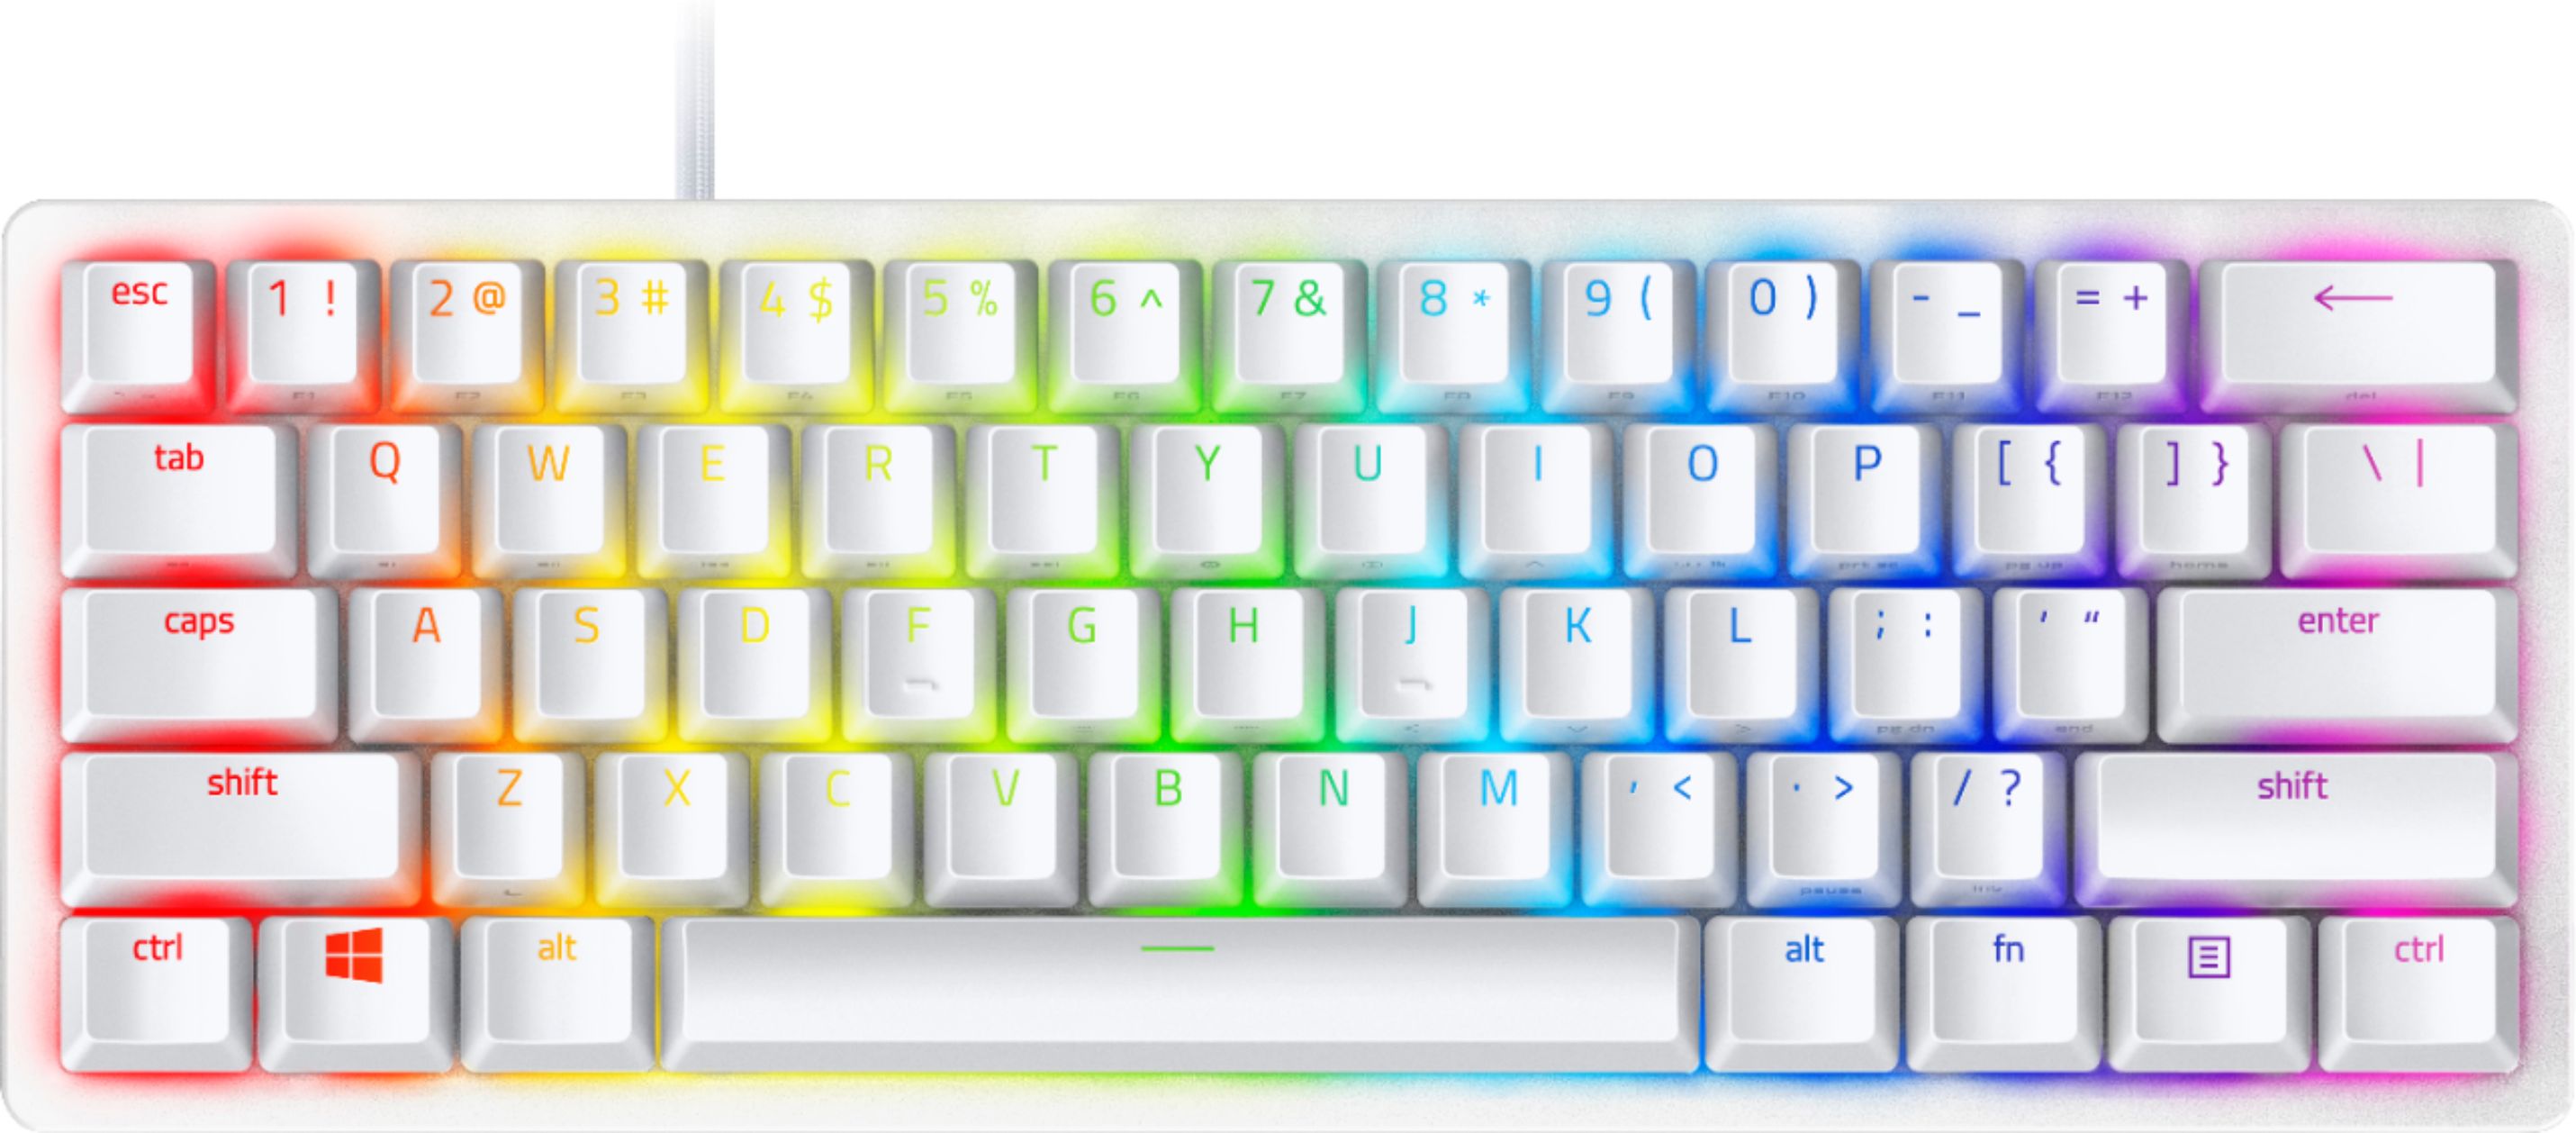 Razer Huntsman Mini Keyboard Review - A Solid 60% Option